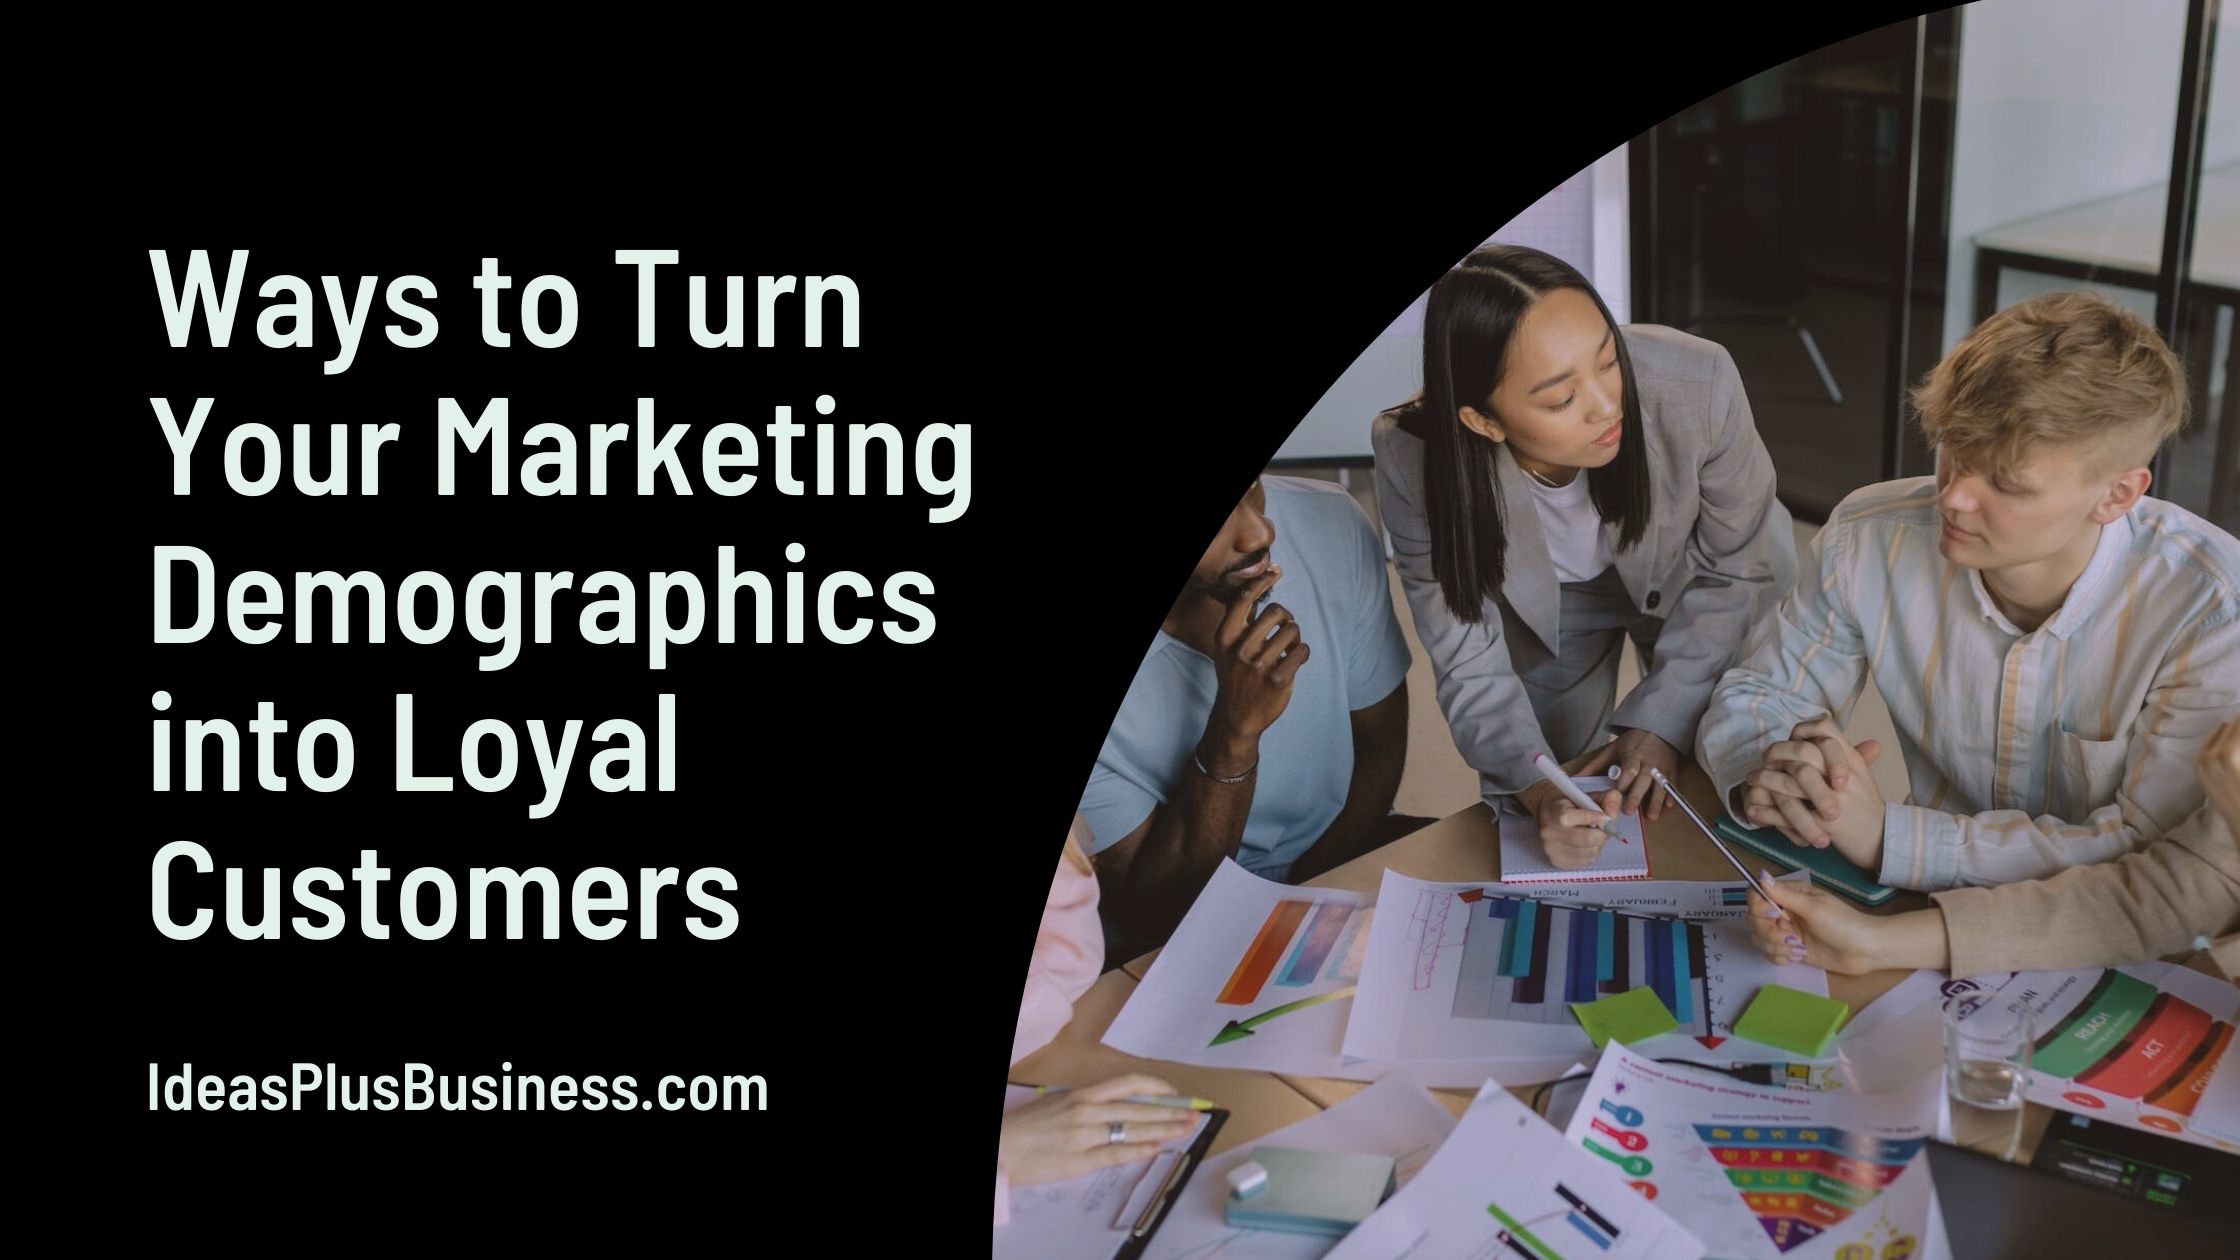 5 Ways to Turn Your Marketing Demographics into Loyal Customers